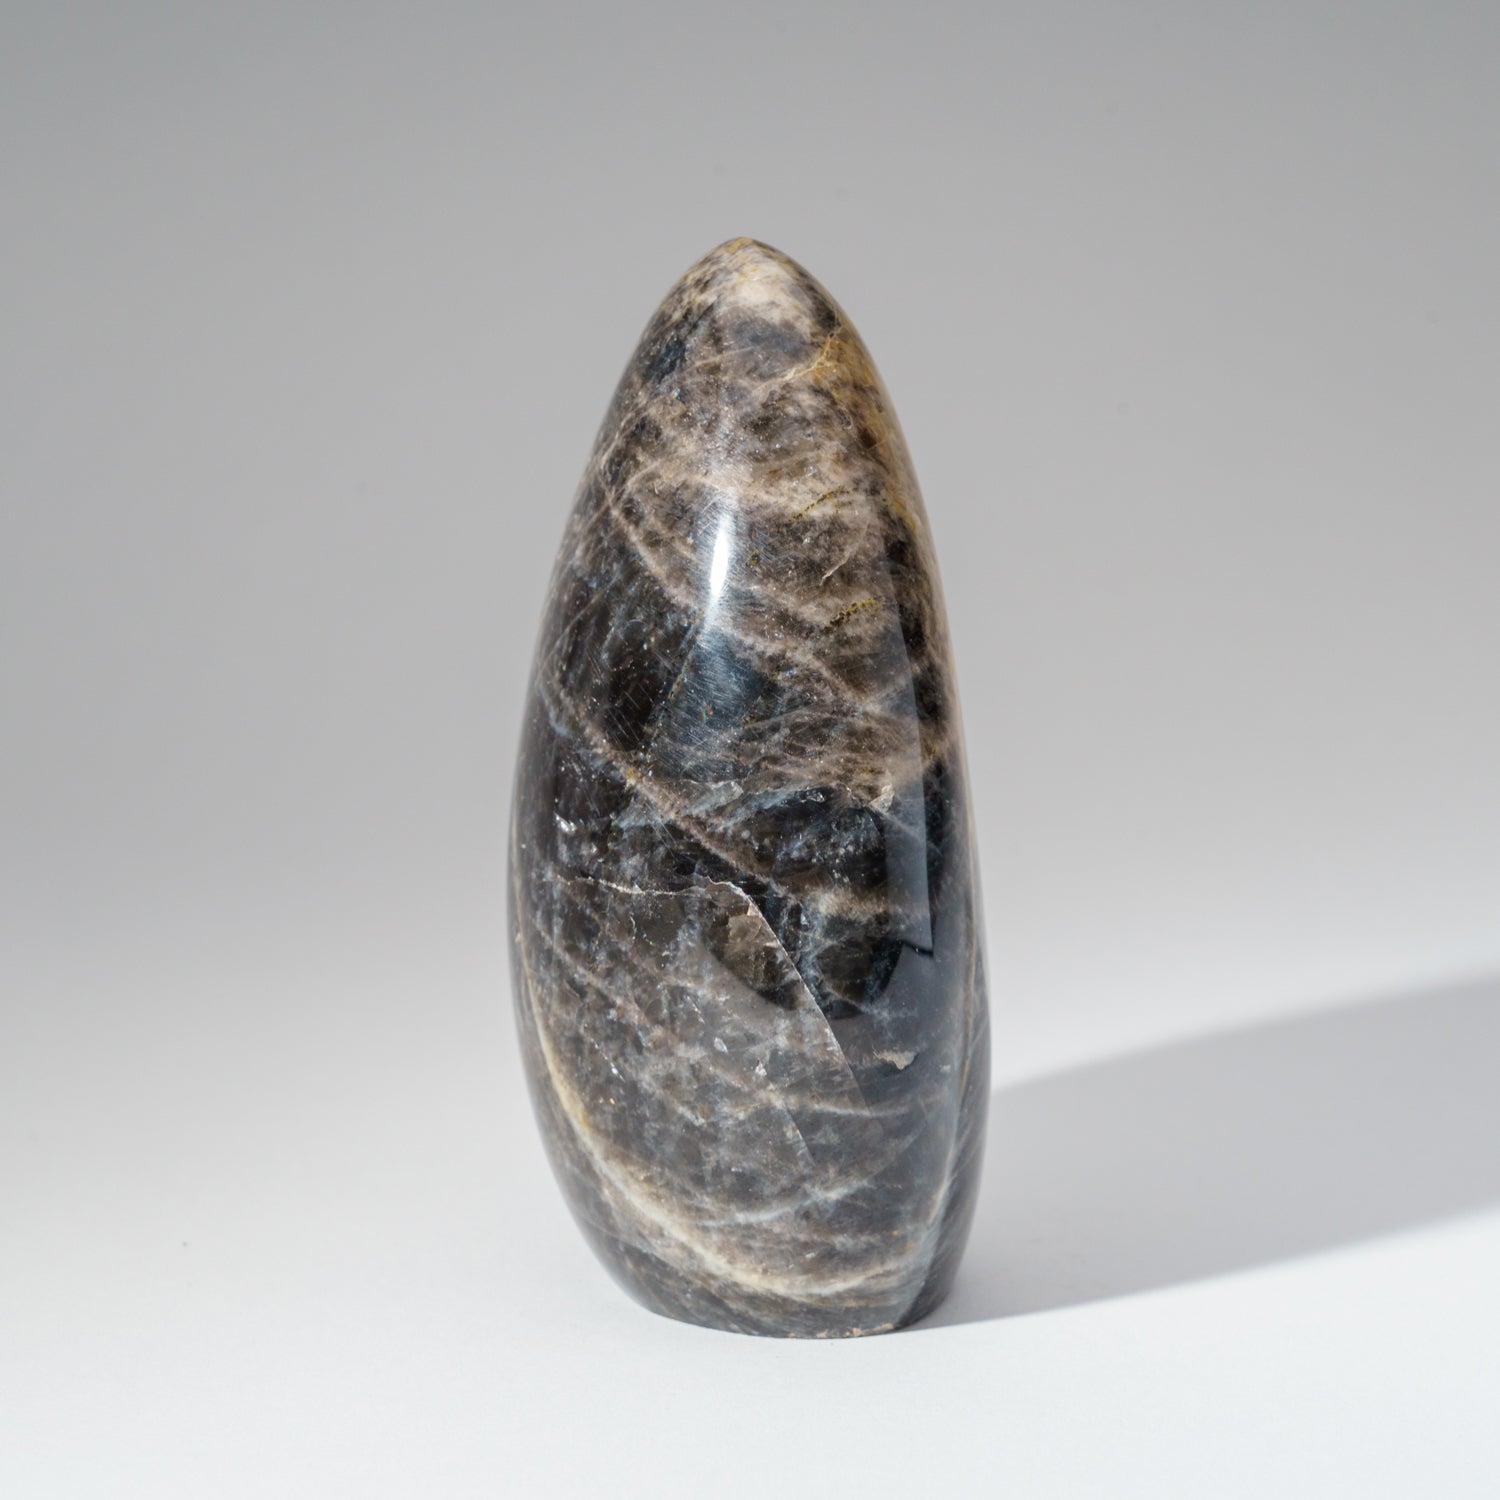 Genuine Polished Black Moonstone Freeform From Madagascar (2.2 lbs)